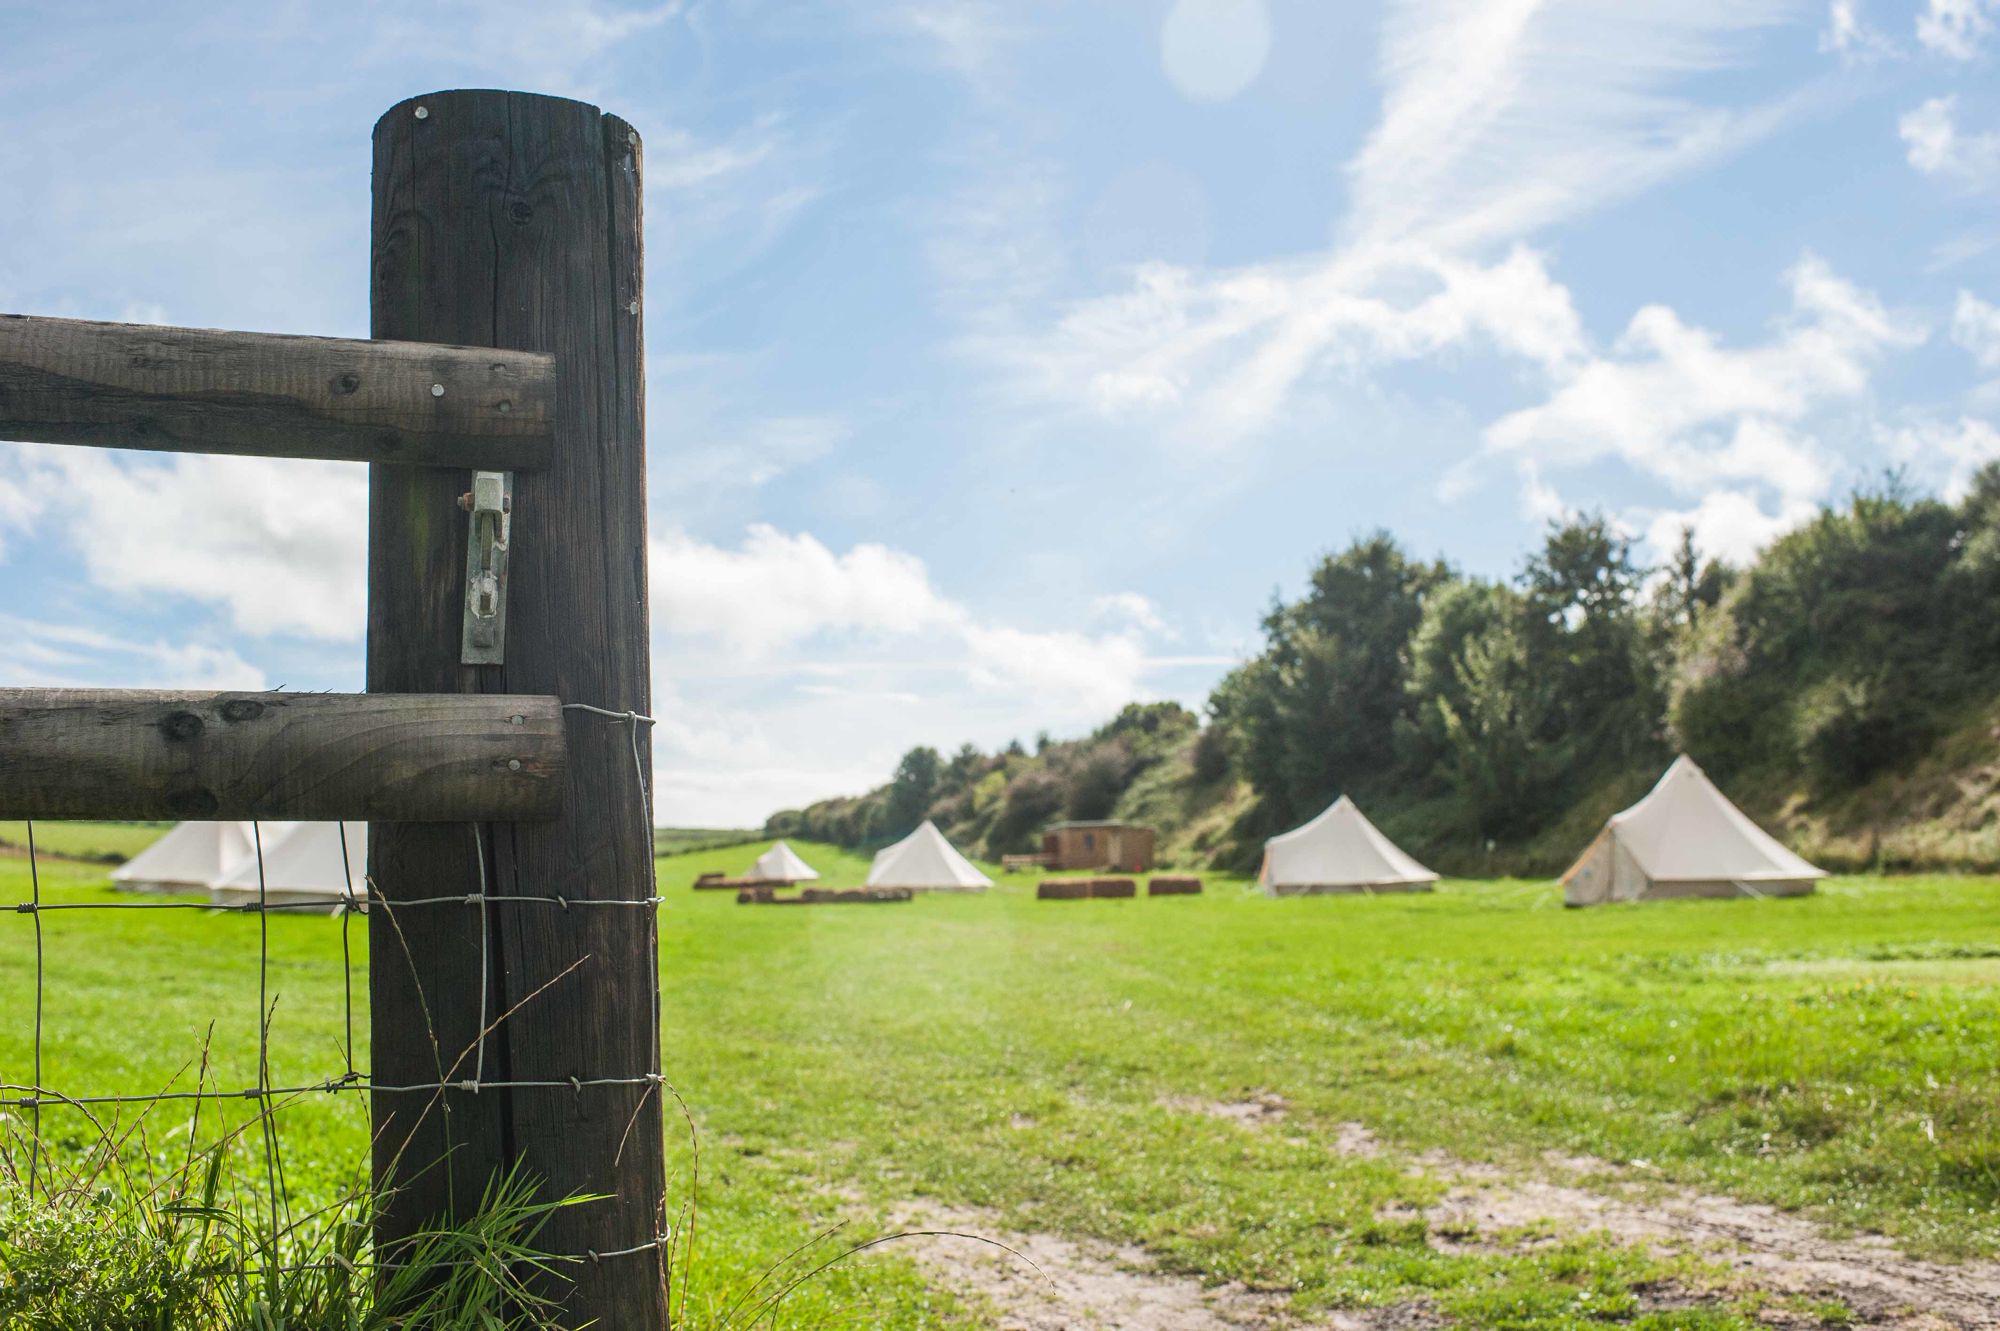 Weymouth Camping – Best campsites near Weymouth, Dorset